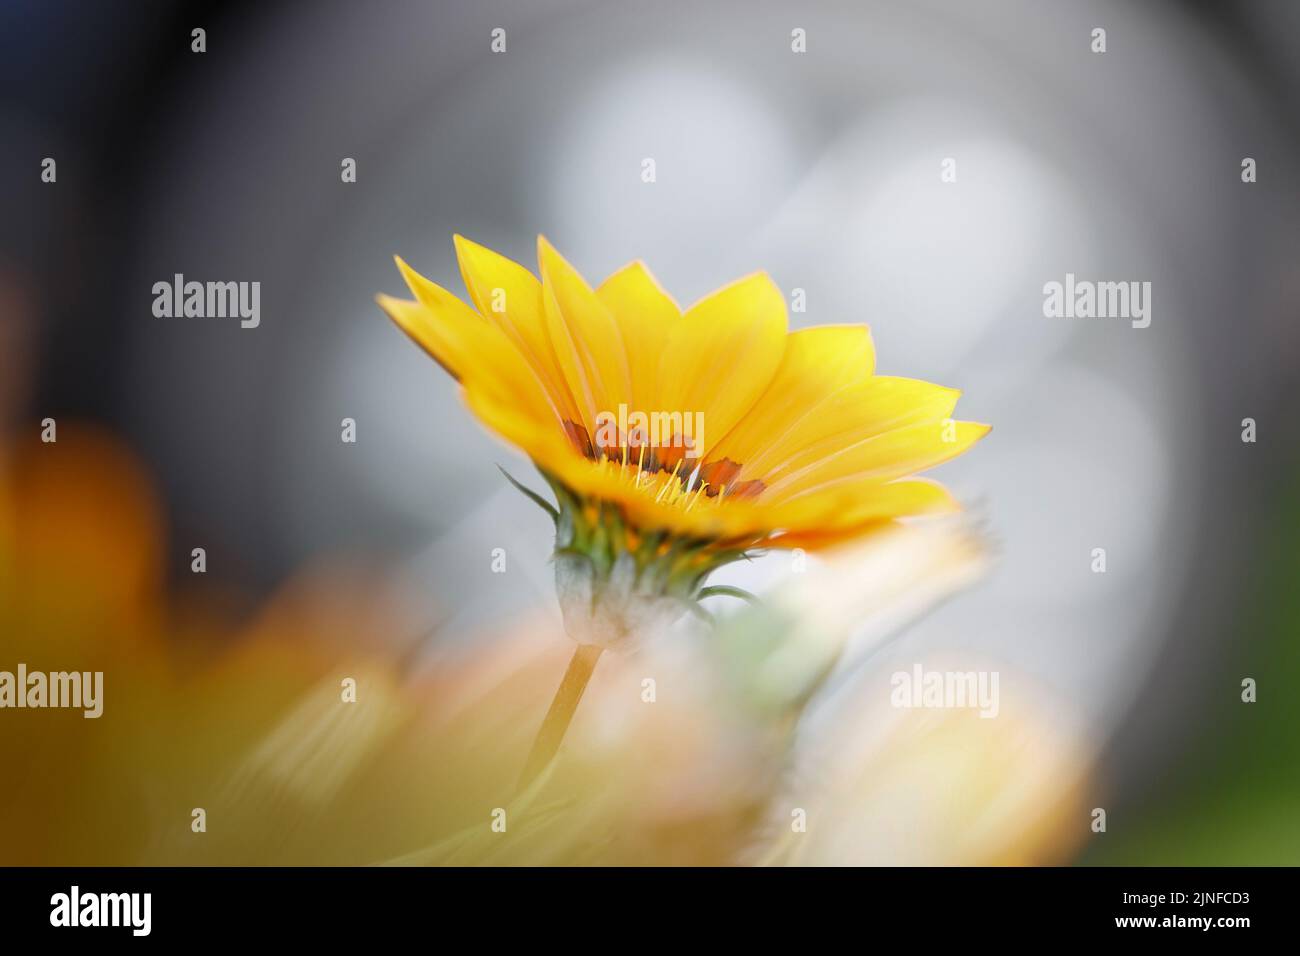 Yellow elegant flower on a light blurred background. Stock Photo